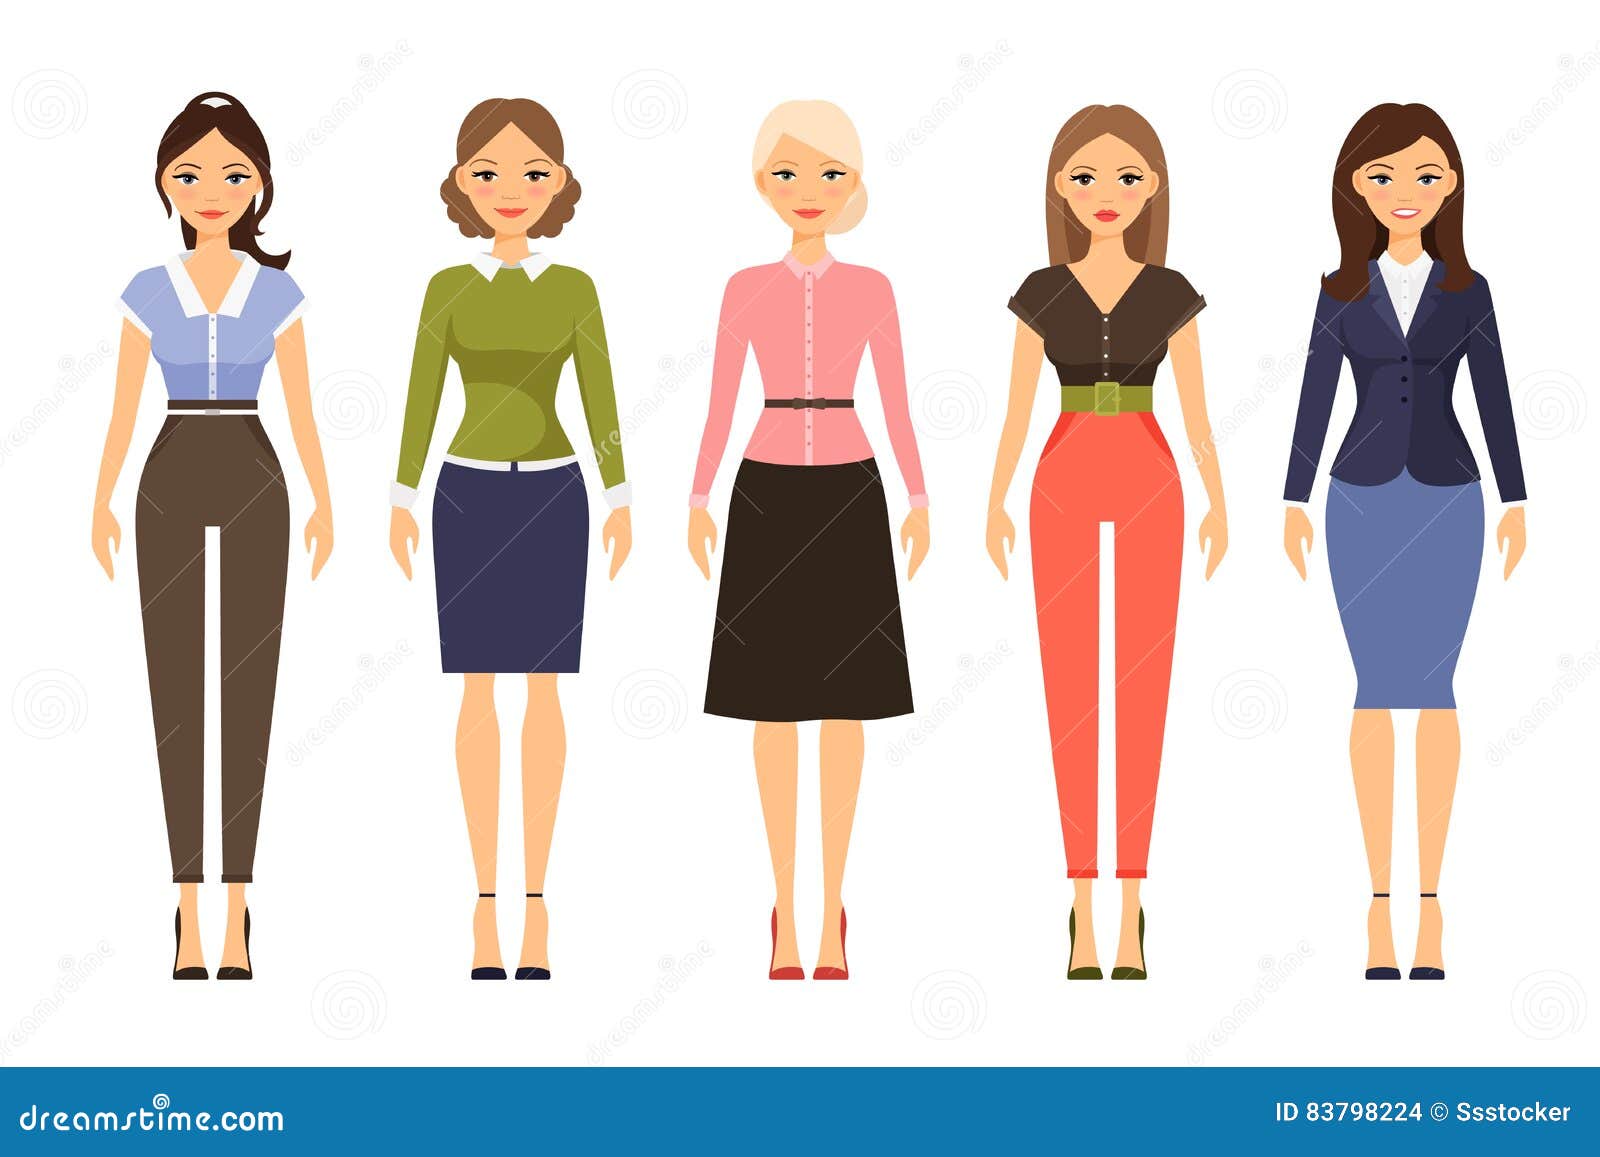 Woman Dresscode Vector Illustration ...